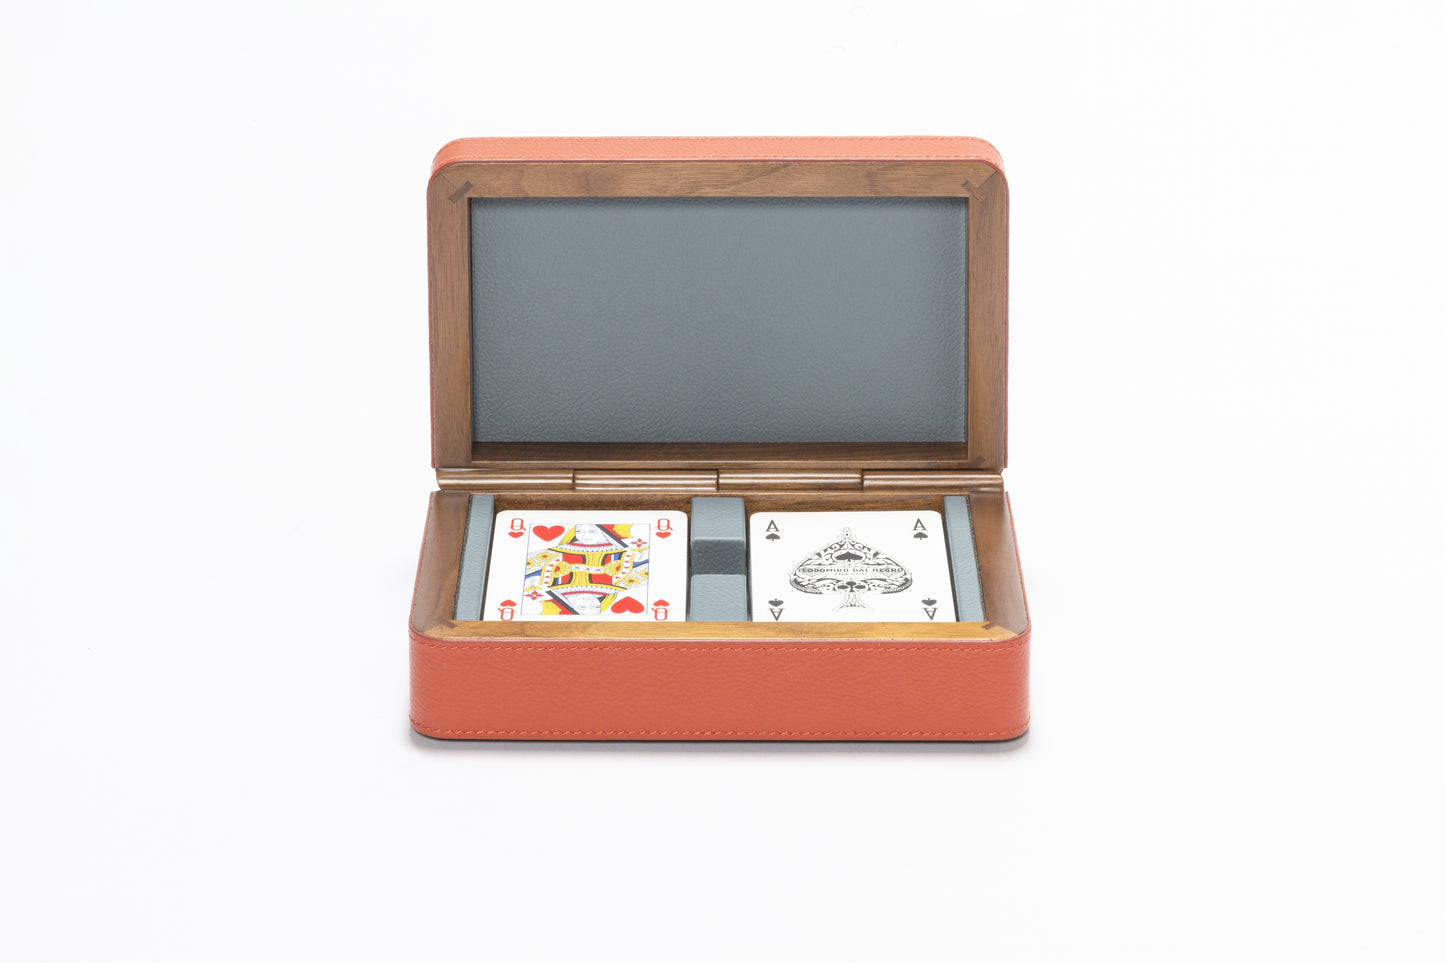 Giobagnara x Poltrona Frau Cards Wooden Box | 2Jour Concierge, #1 luxury high-end gift & lifestyle shop